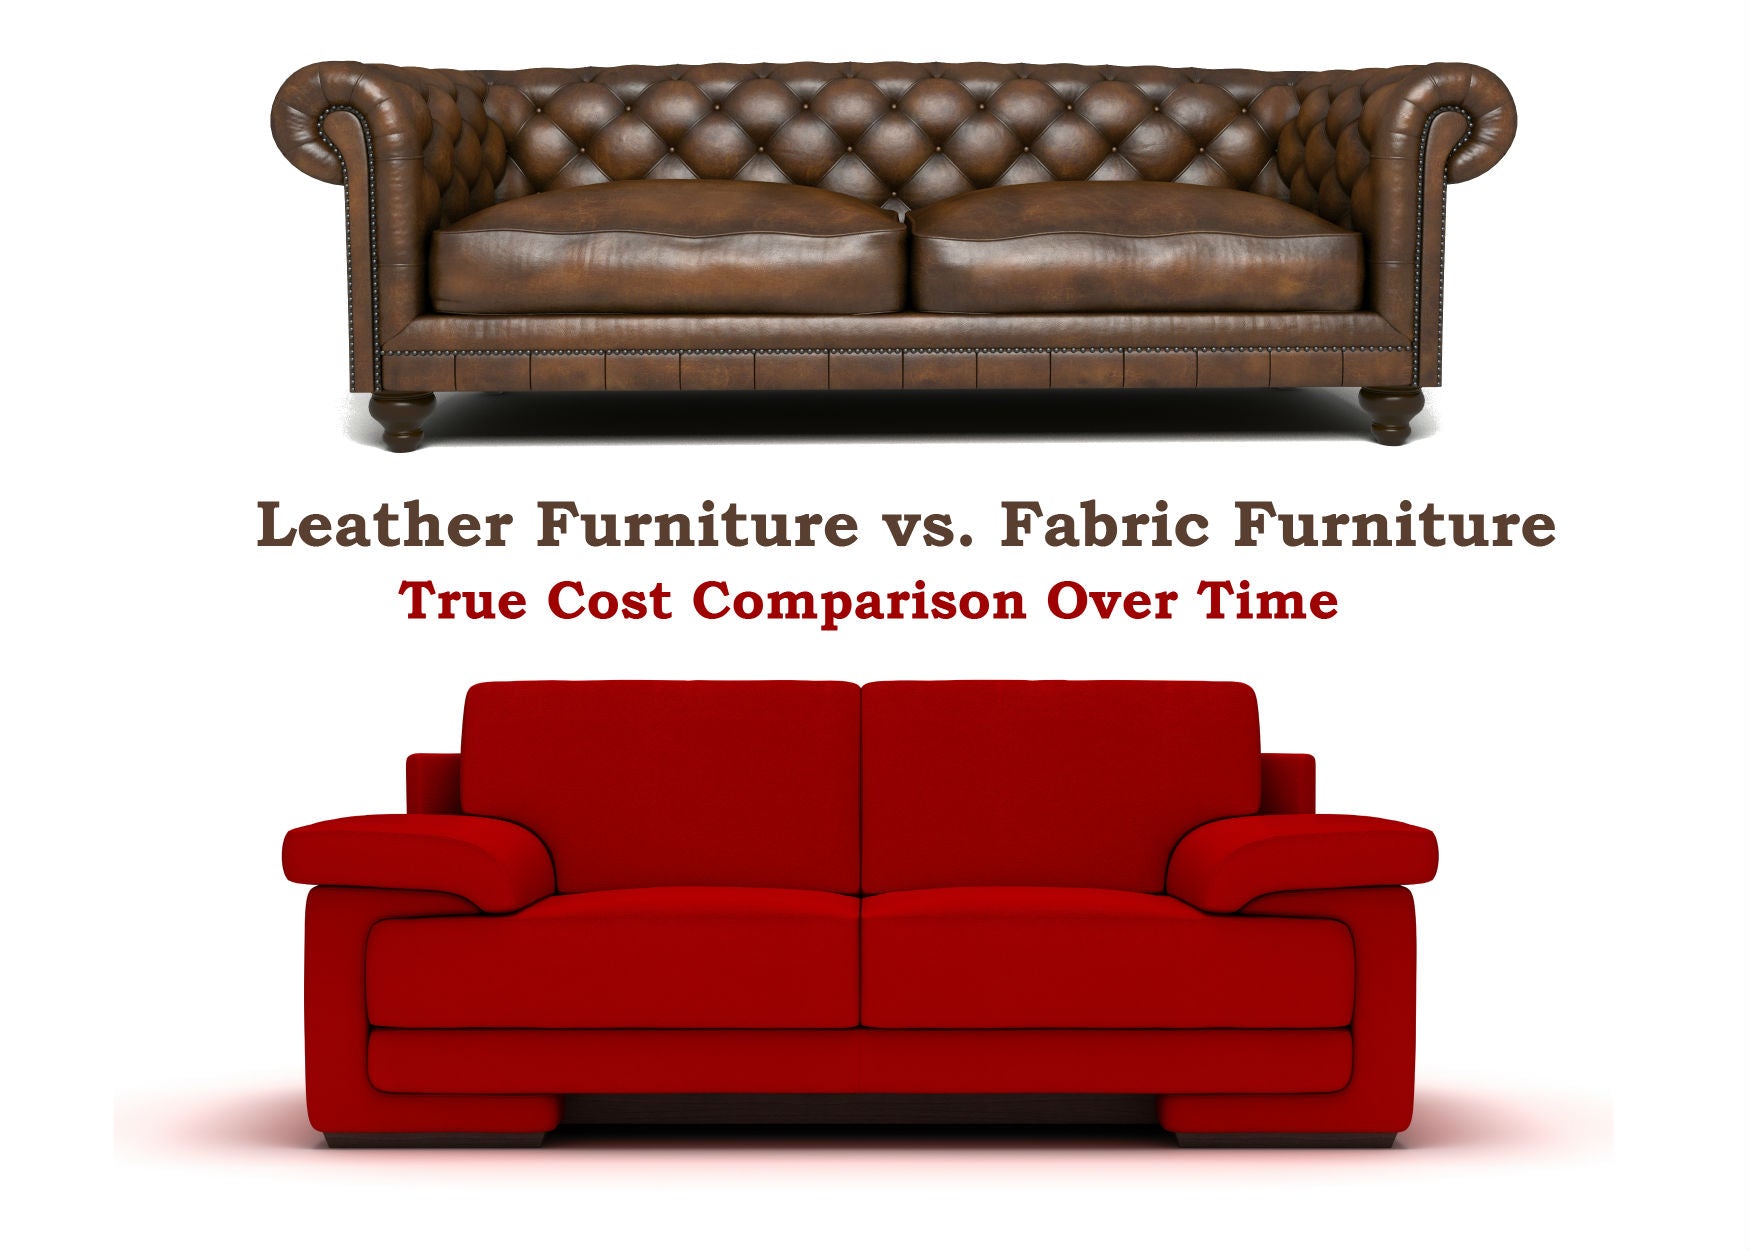 Leather Furniture vs Fabric Furniture Cost